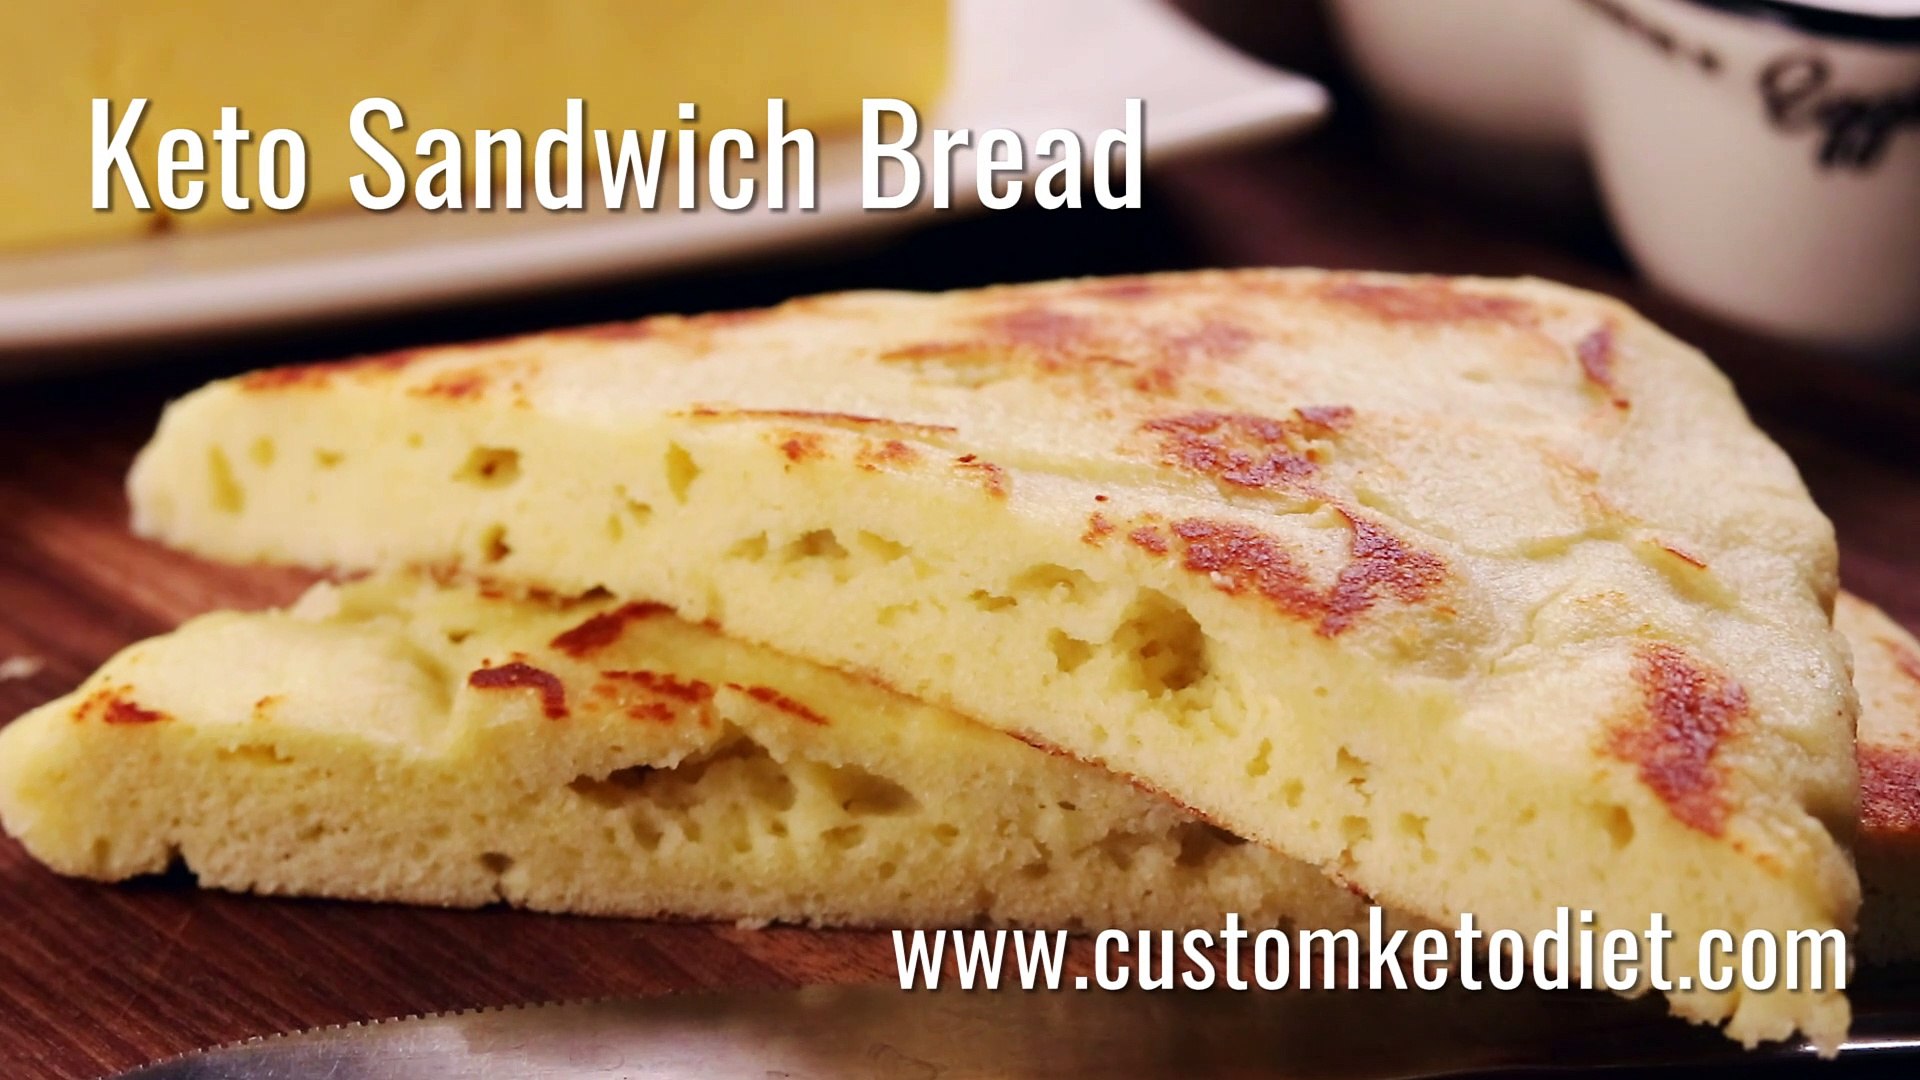 Keto Sandwich Bread | Keto Recipes | Easy To Make Recipes | Keto Diet